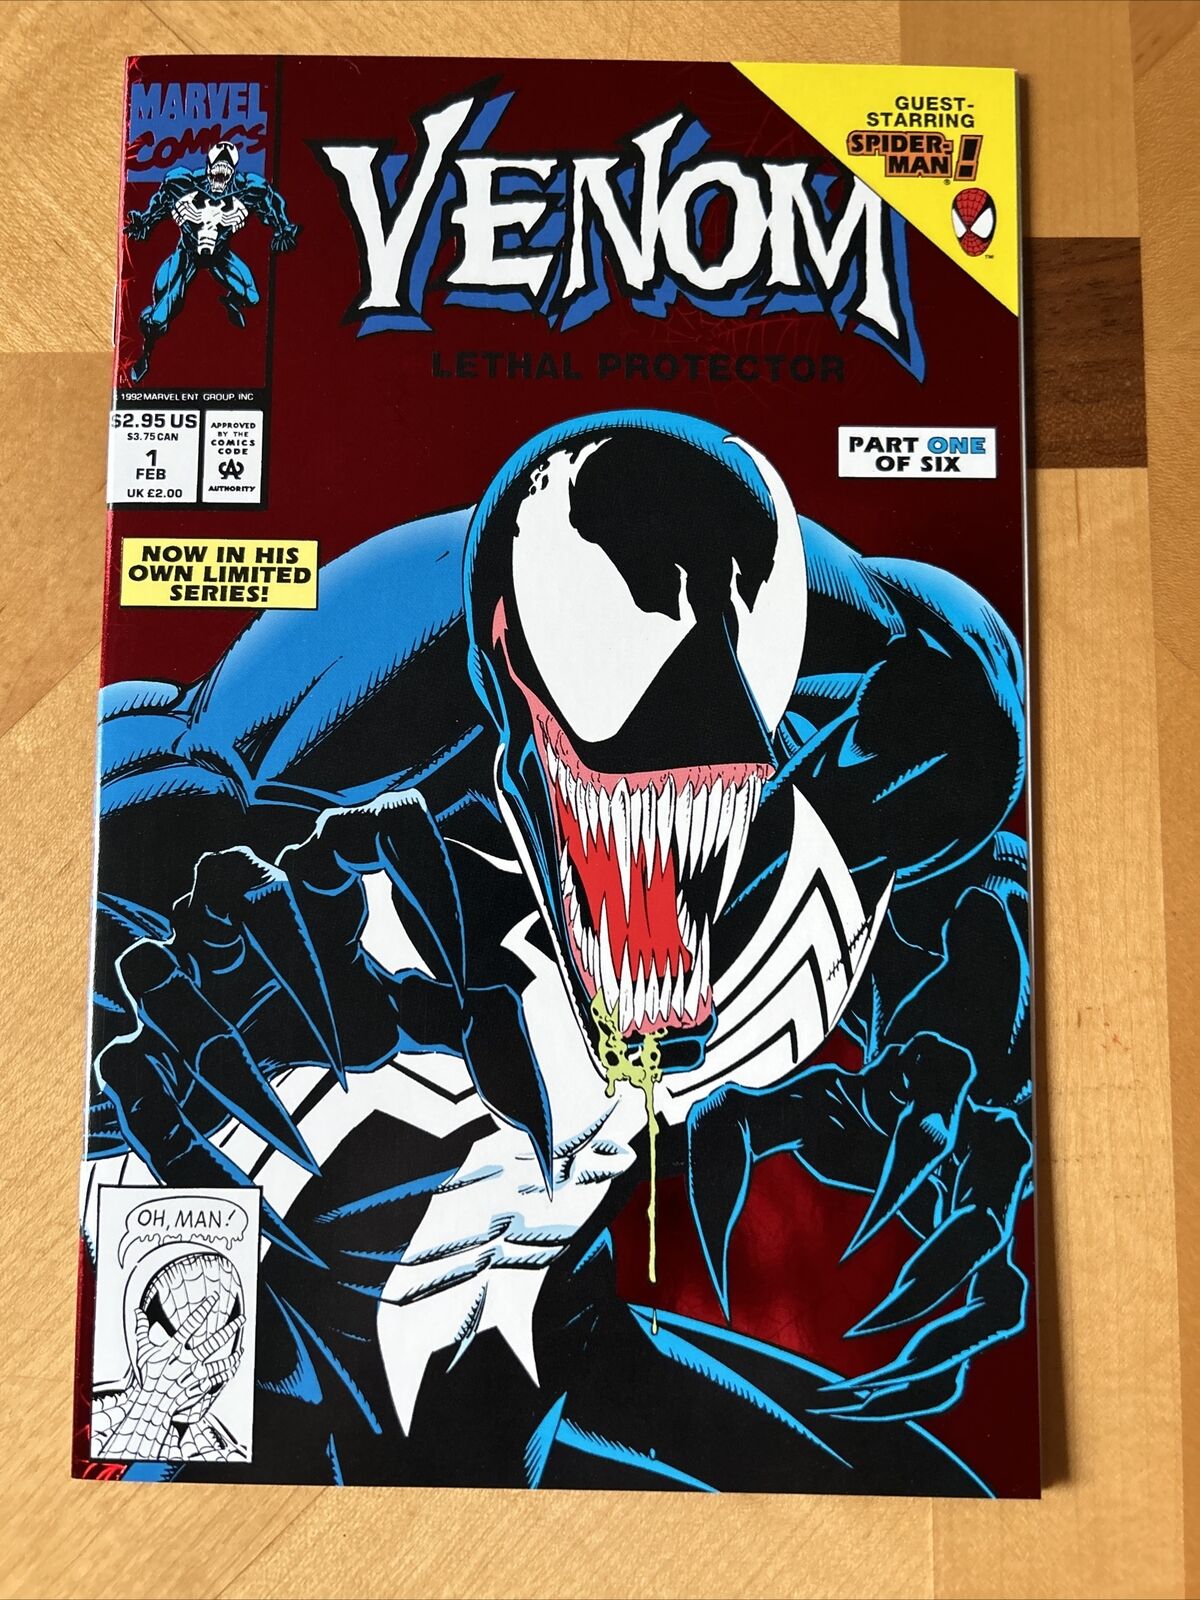 1992 Marvel Comics Venom Lethal Protector #1 First Print Comic Book